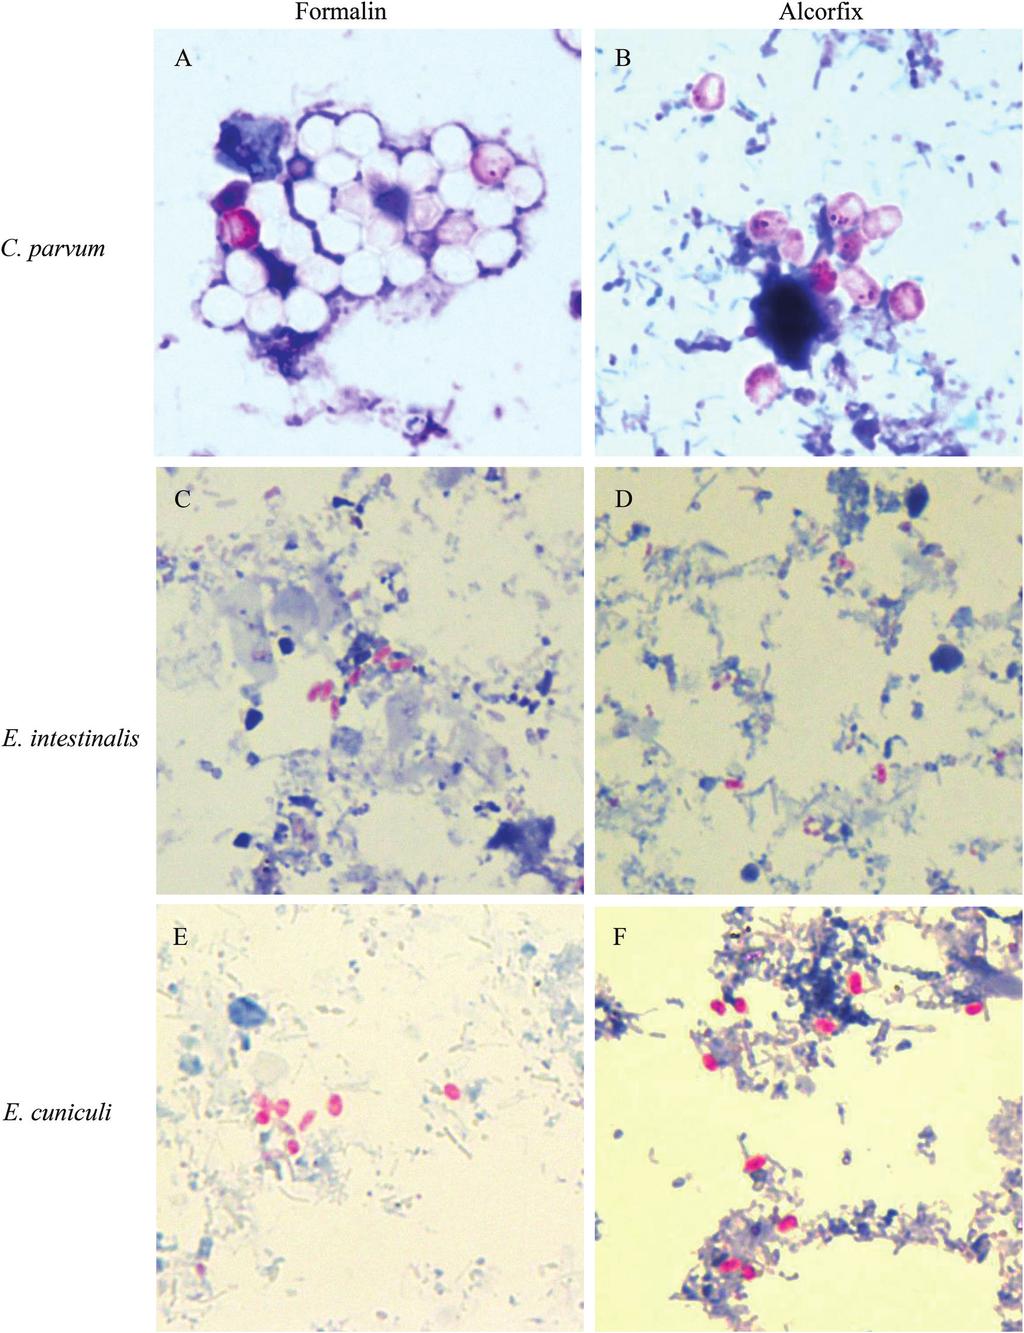 Improved Specimen Processing for Ova and Parasites FIG 3 Representative images of stool specimens spiked with live coccidia (Cryptosporidium parvum) (A and B) or microsporidia (Encephalitozoon